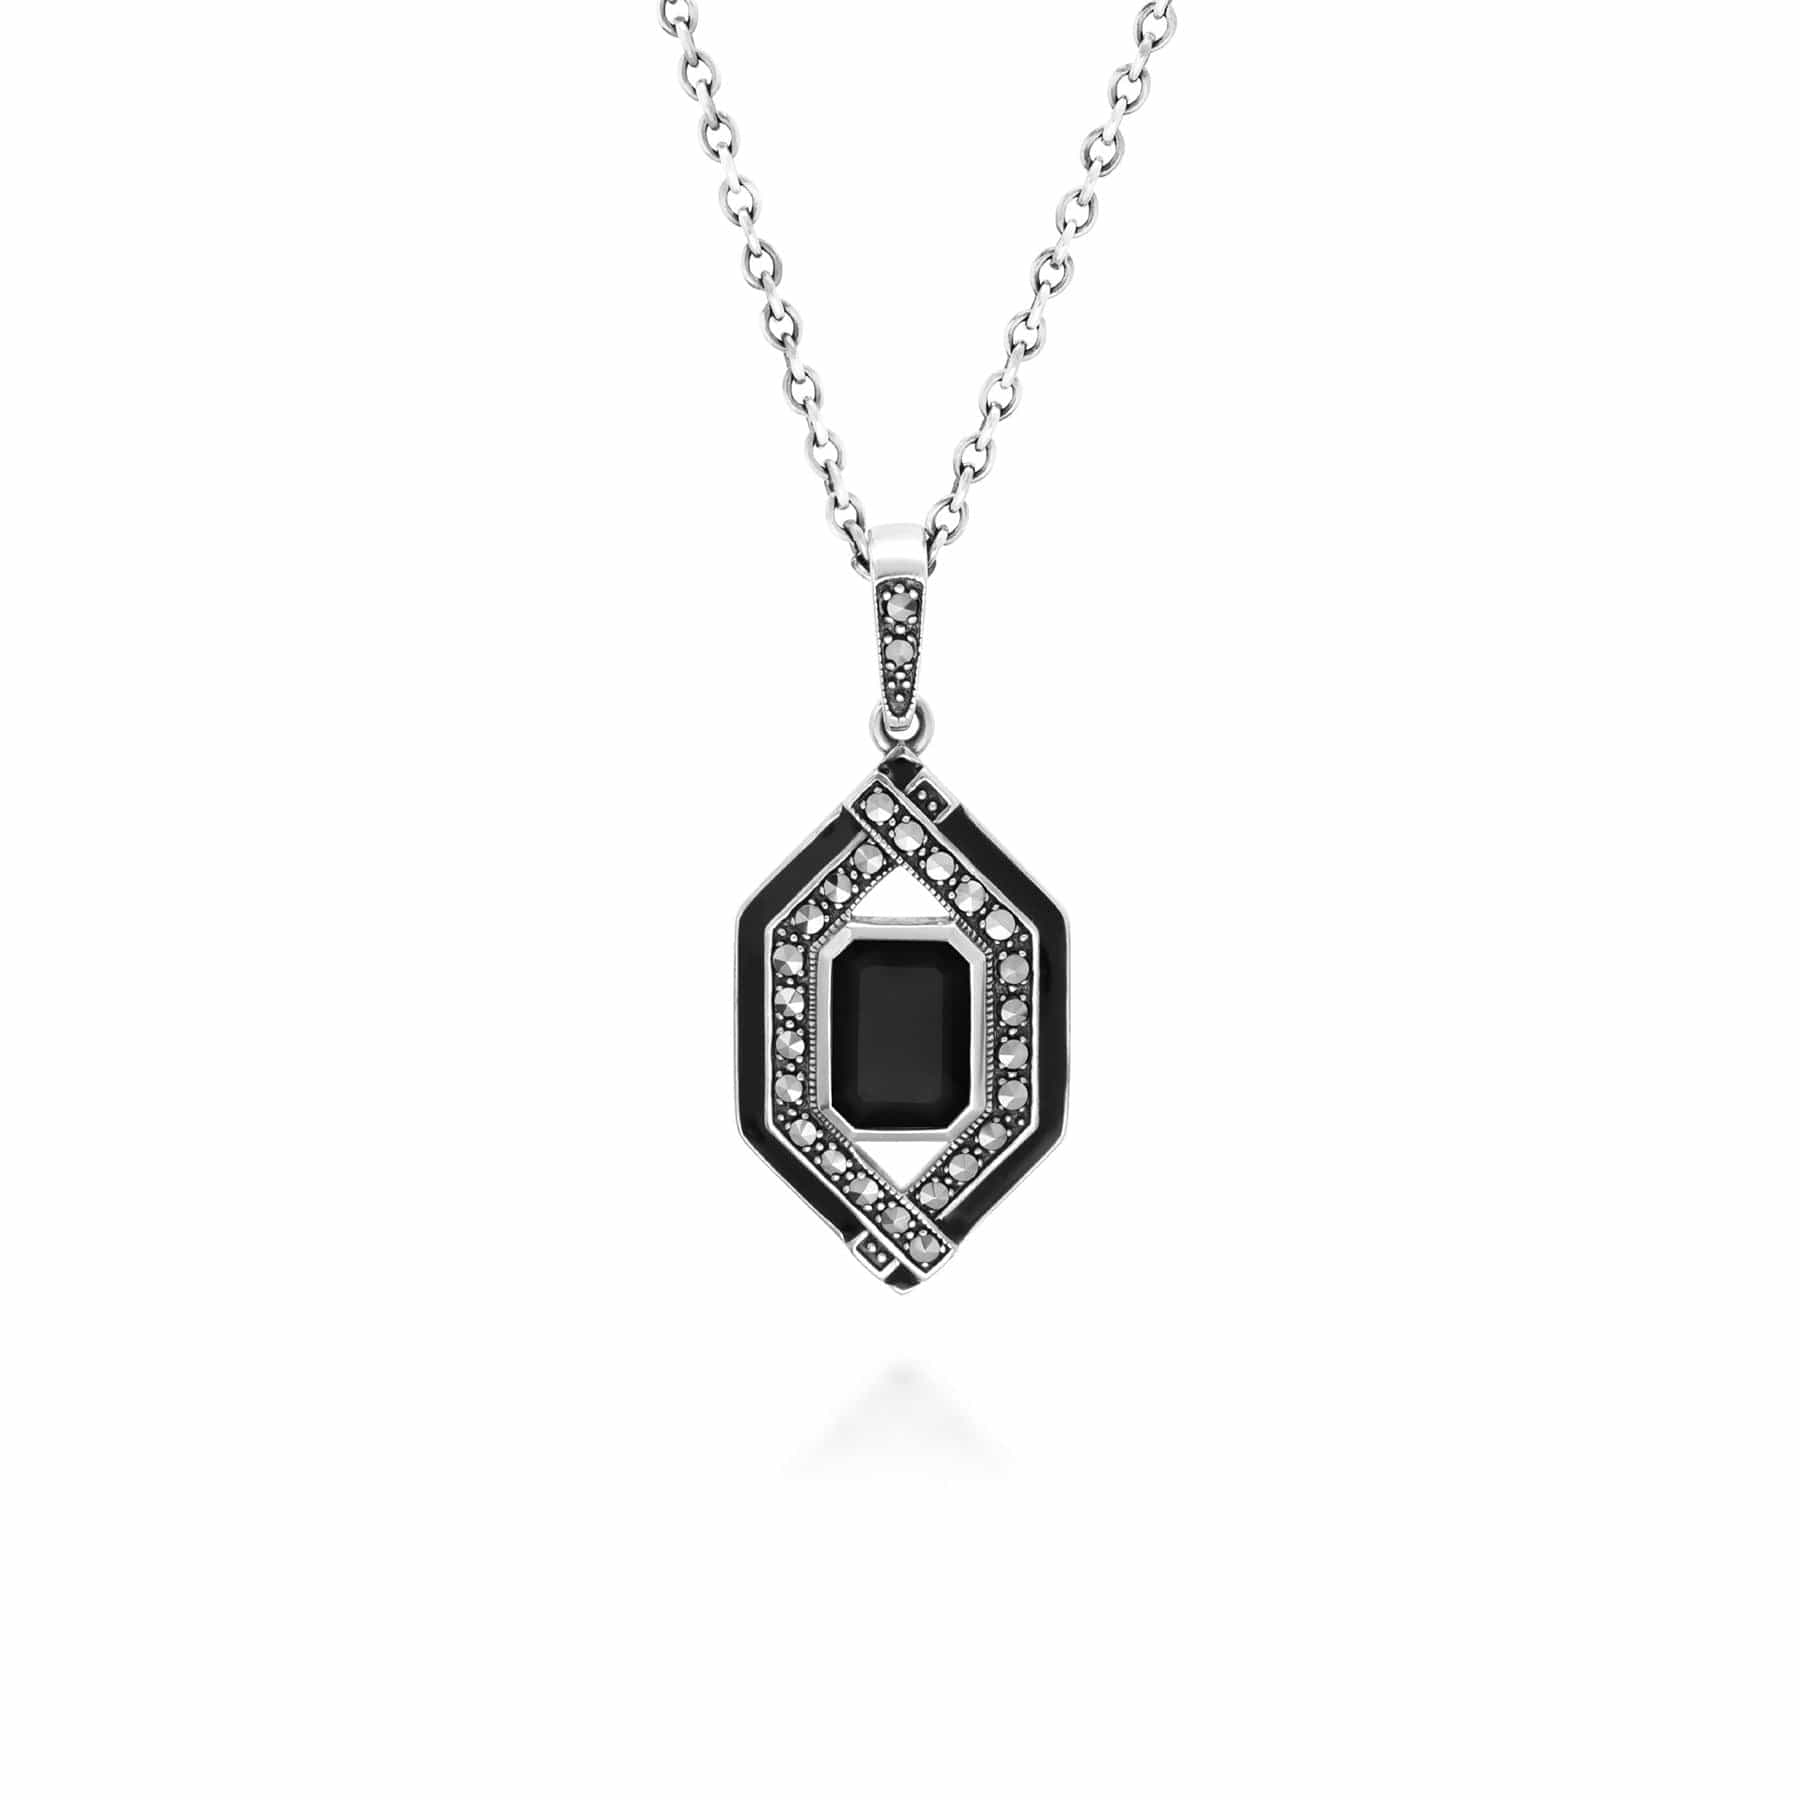 214N709401925 Art Deco Inspired Black Spinel, Enamel & Marcasite Necklace in Sterling Silver 1